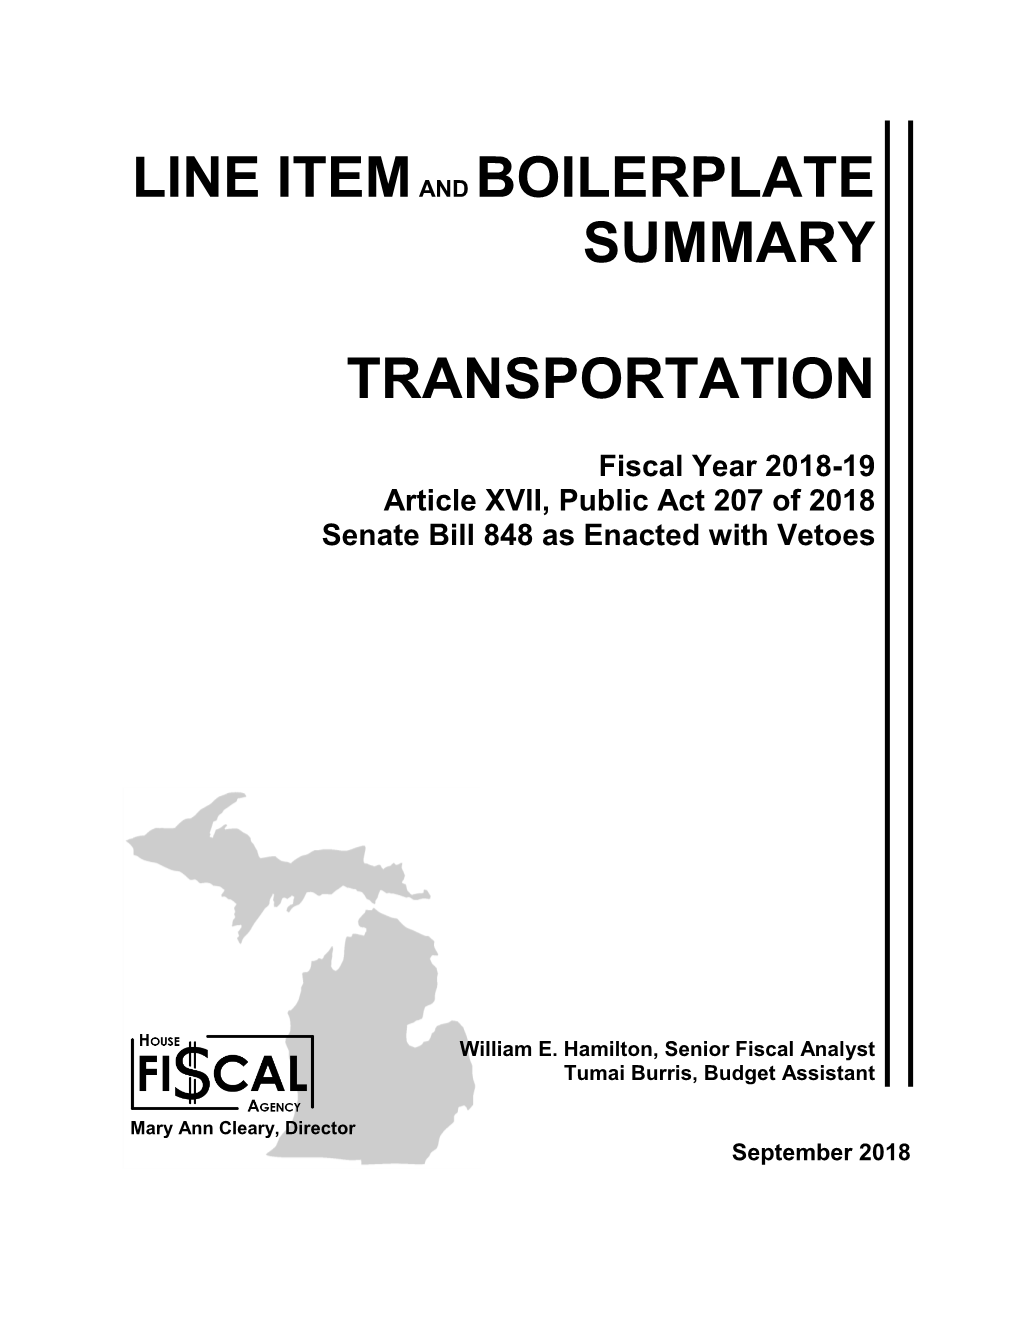 Line Item and Boilerplate Summary: Transportation